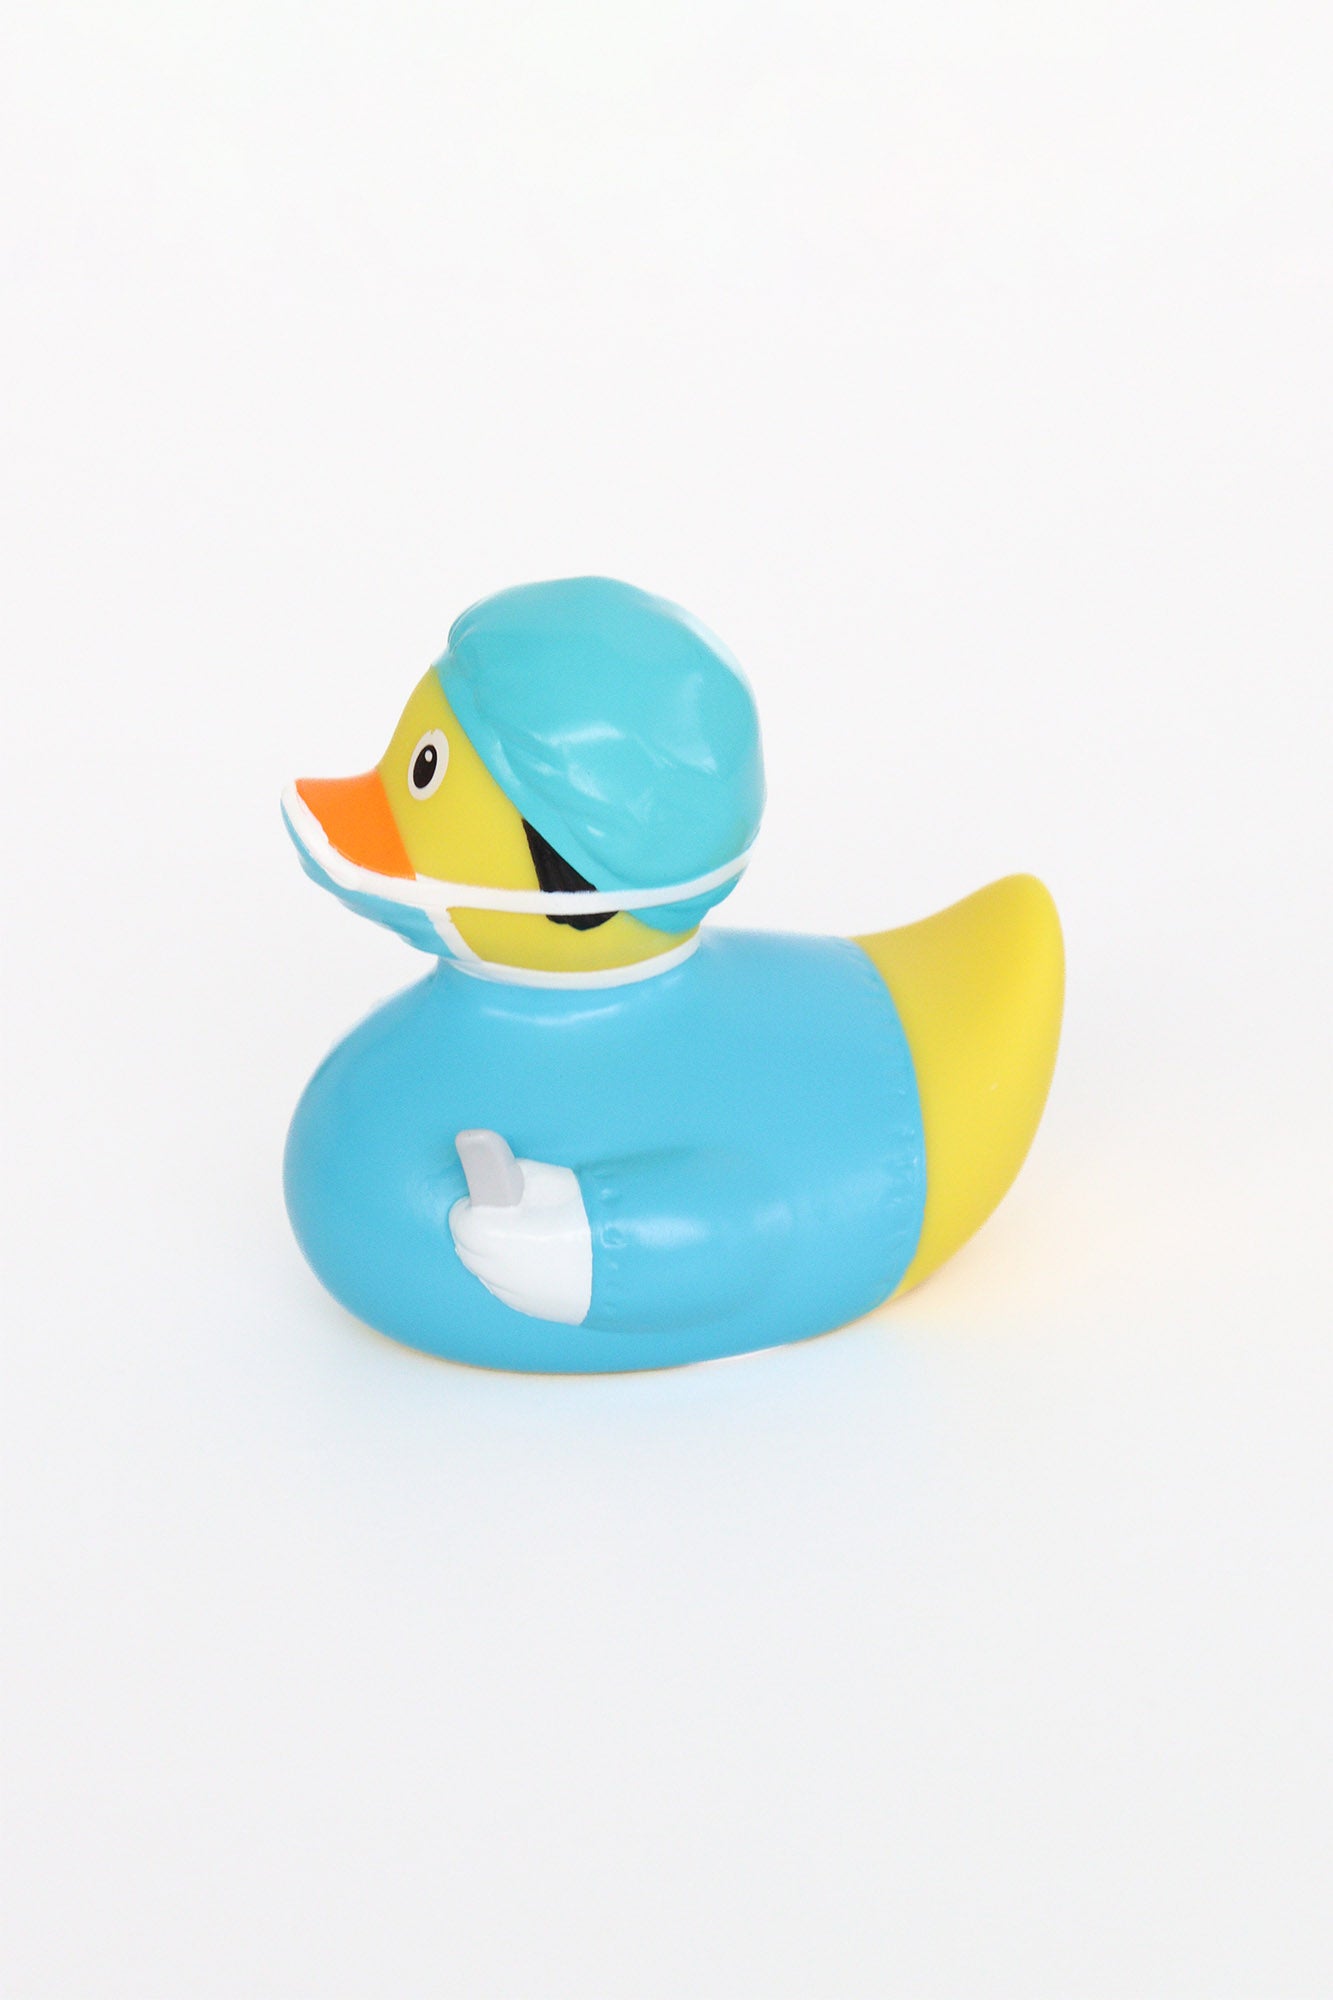 Surgeon plastic duck toy